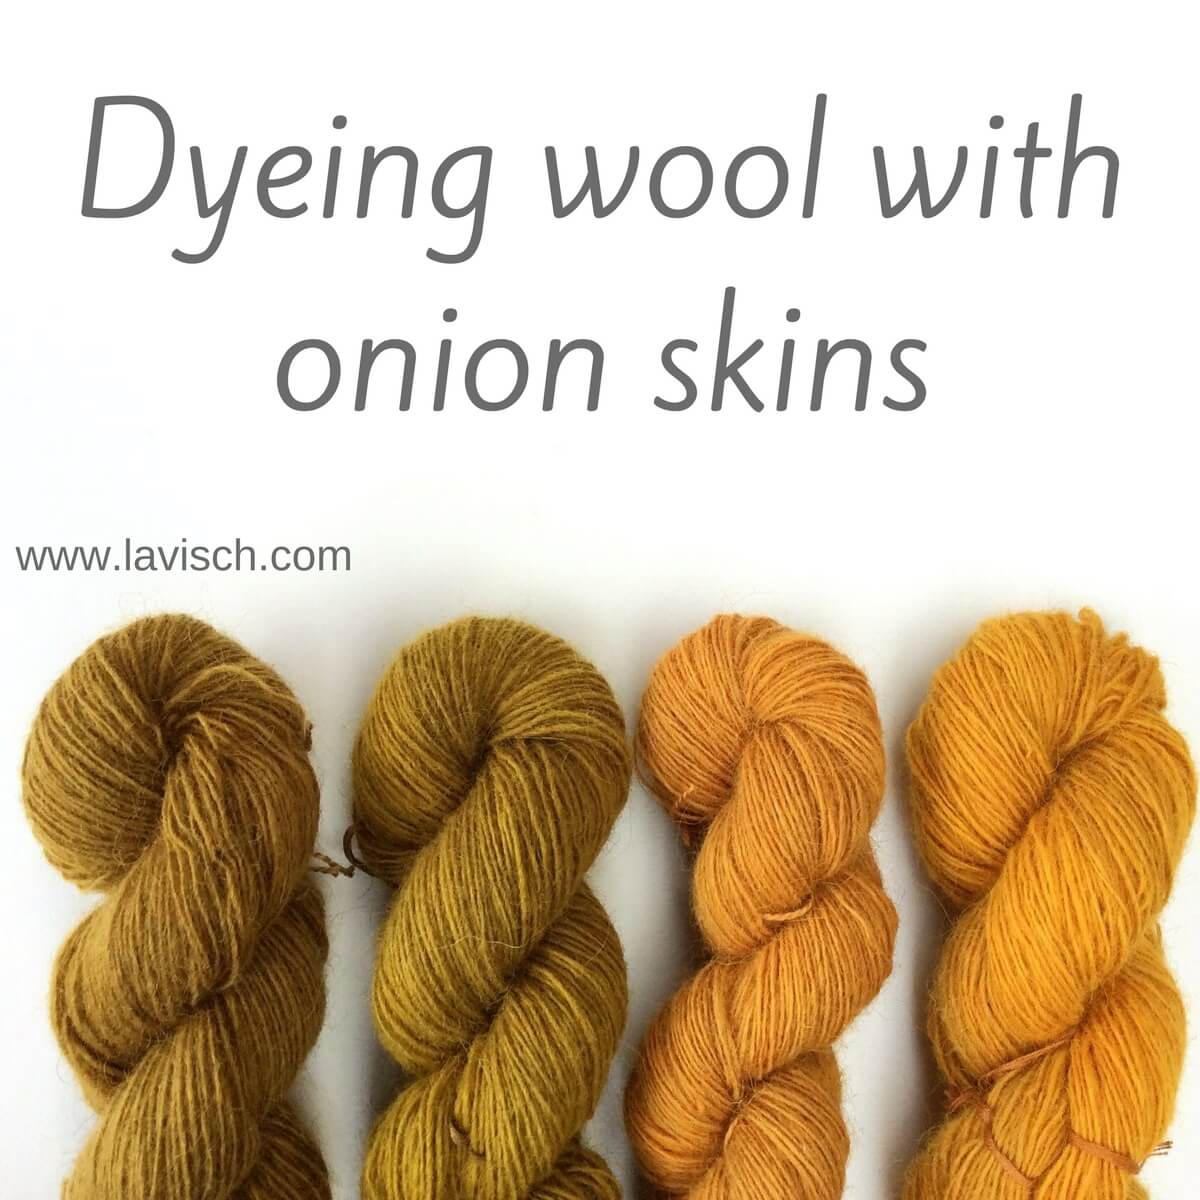 dyeing wool with onion skins - La Visch Designs